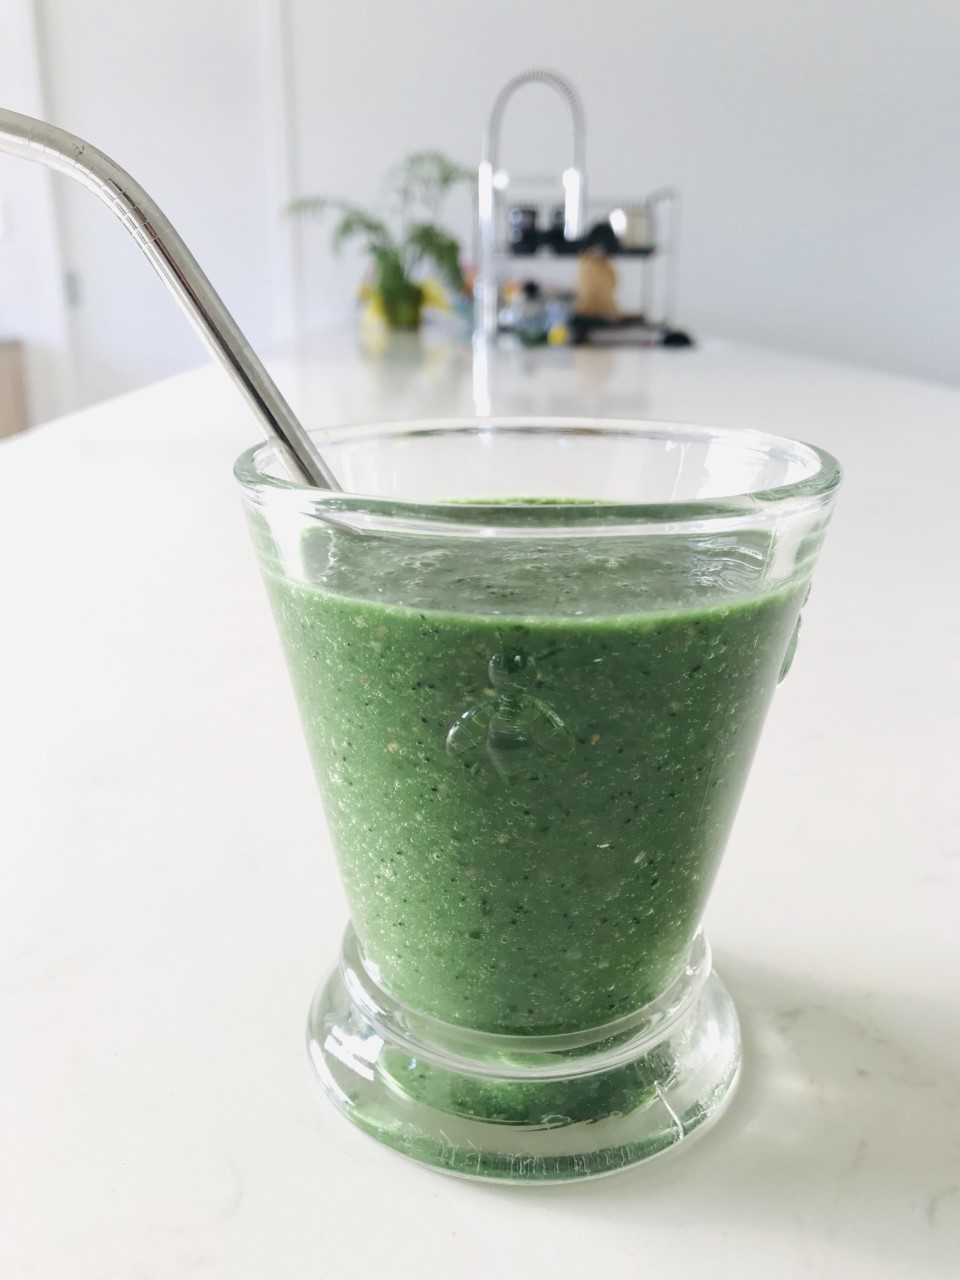 Green spirulina smoothie in a glass